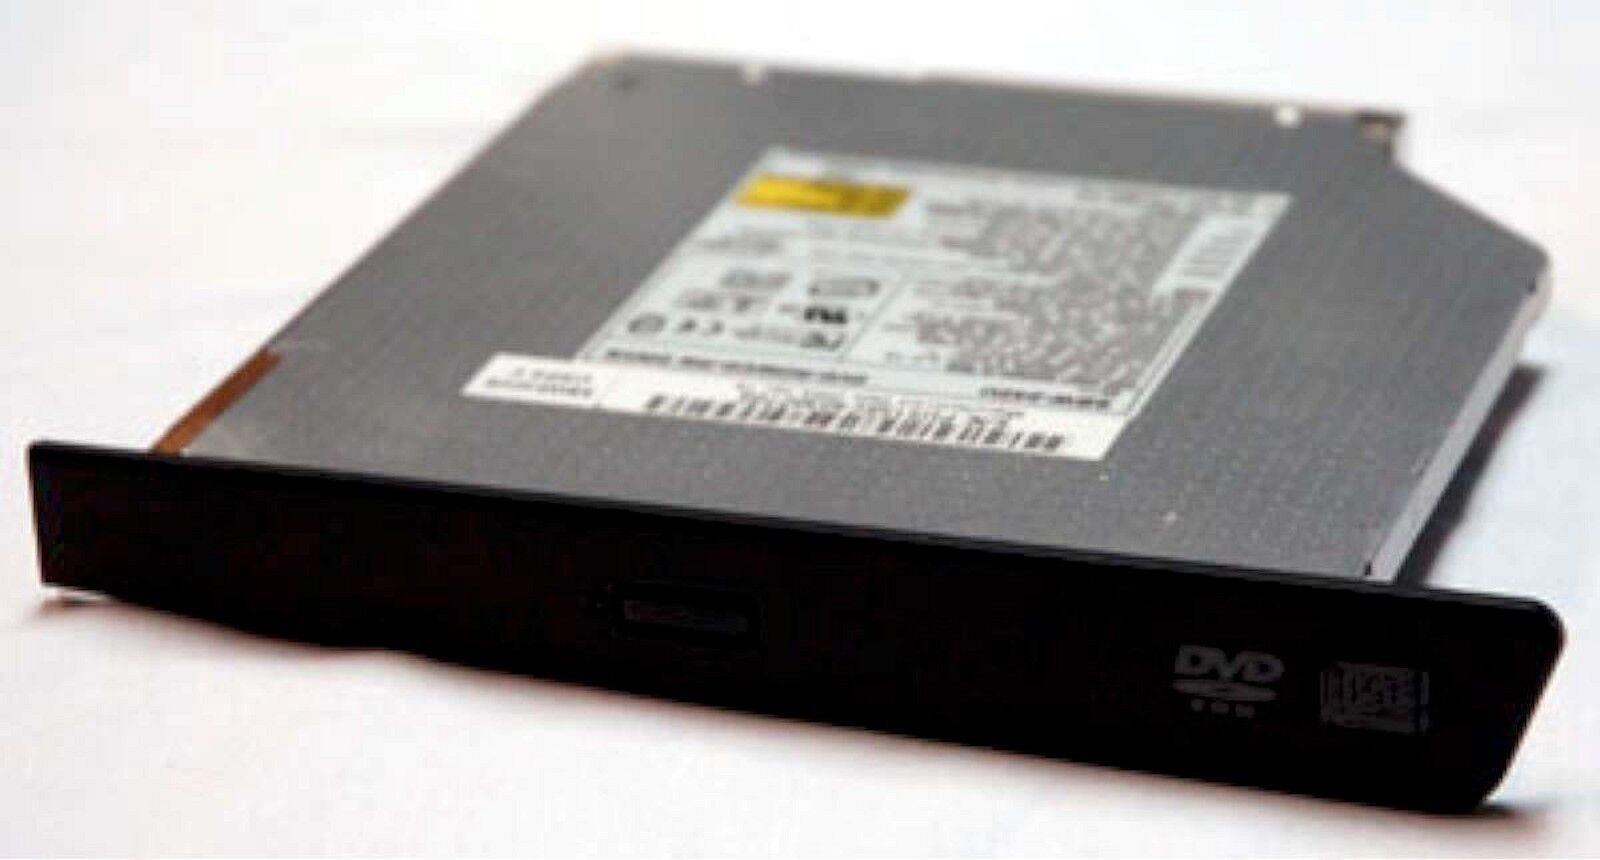 Sony Vaio PCG-K K13 K15 K17 Laptop Internal CDRW/DVD Combo Drive SBW-242C OEM - $11.24